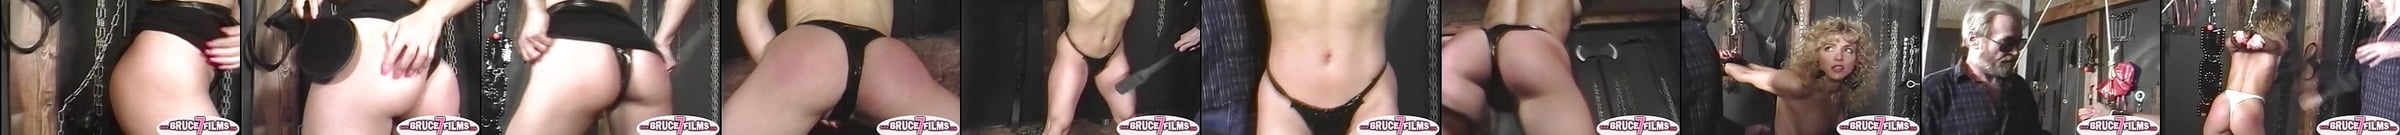 Bruce Seven Films ポルノビデオ Xhamster